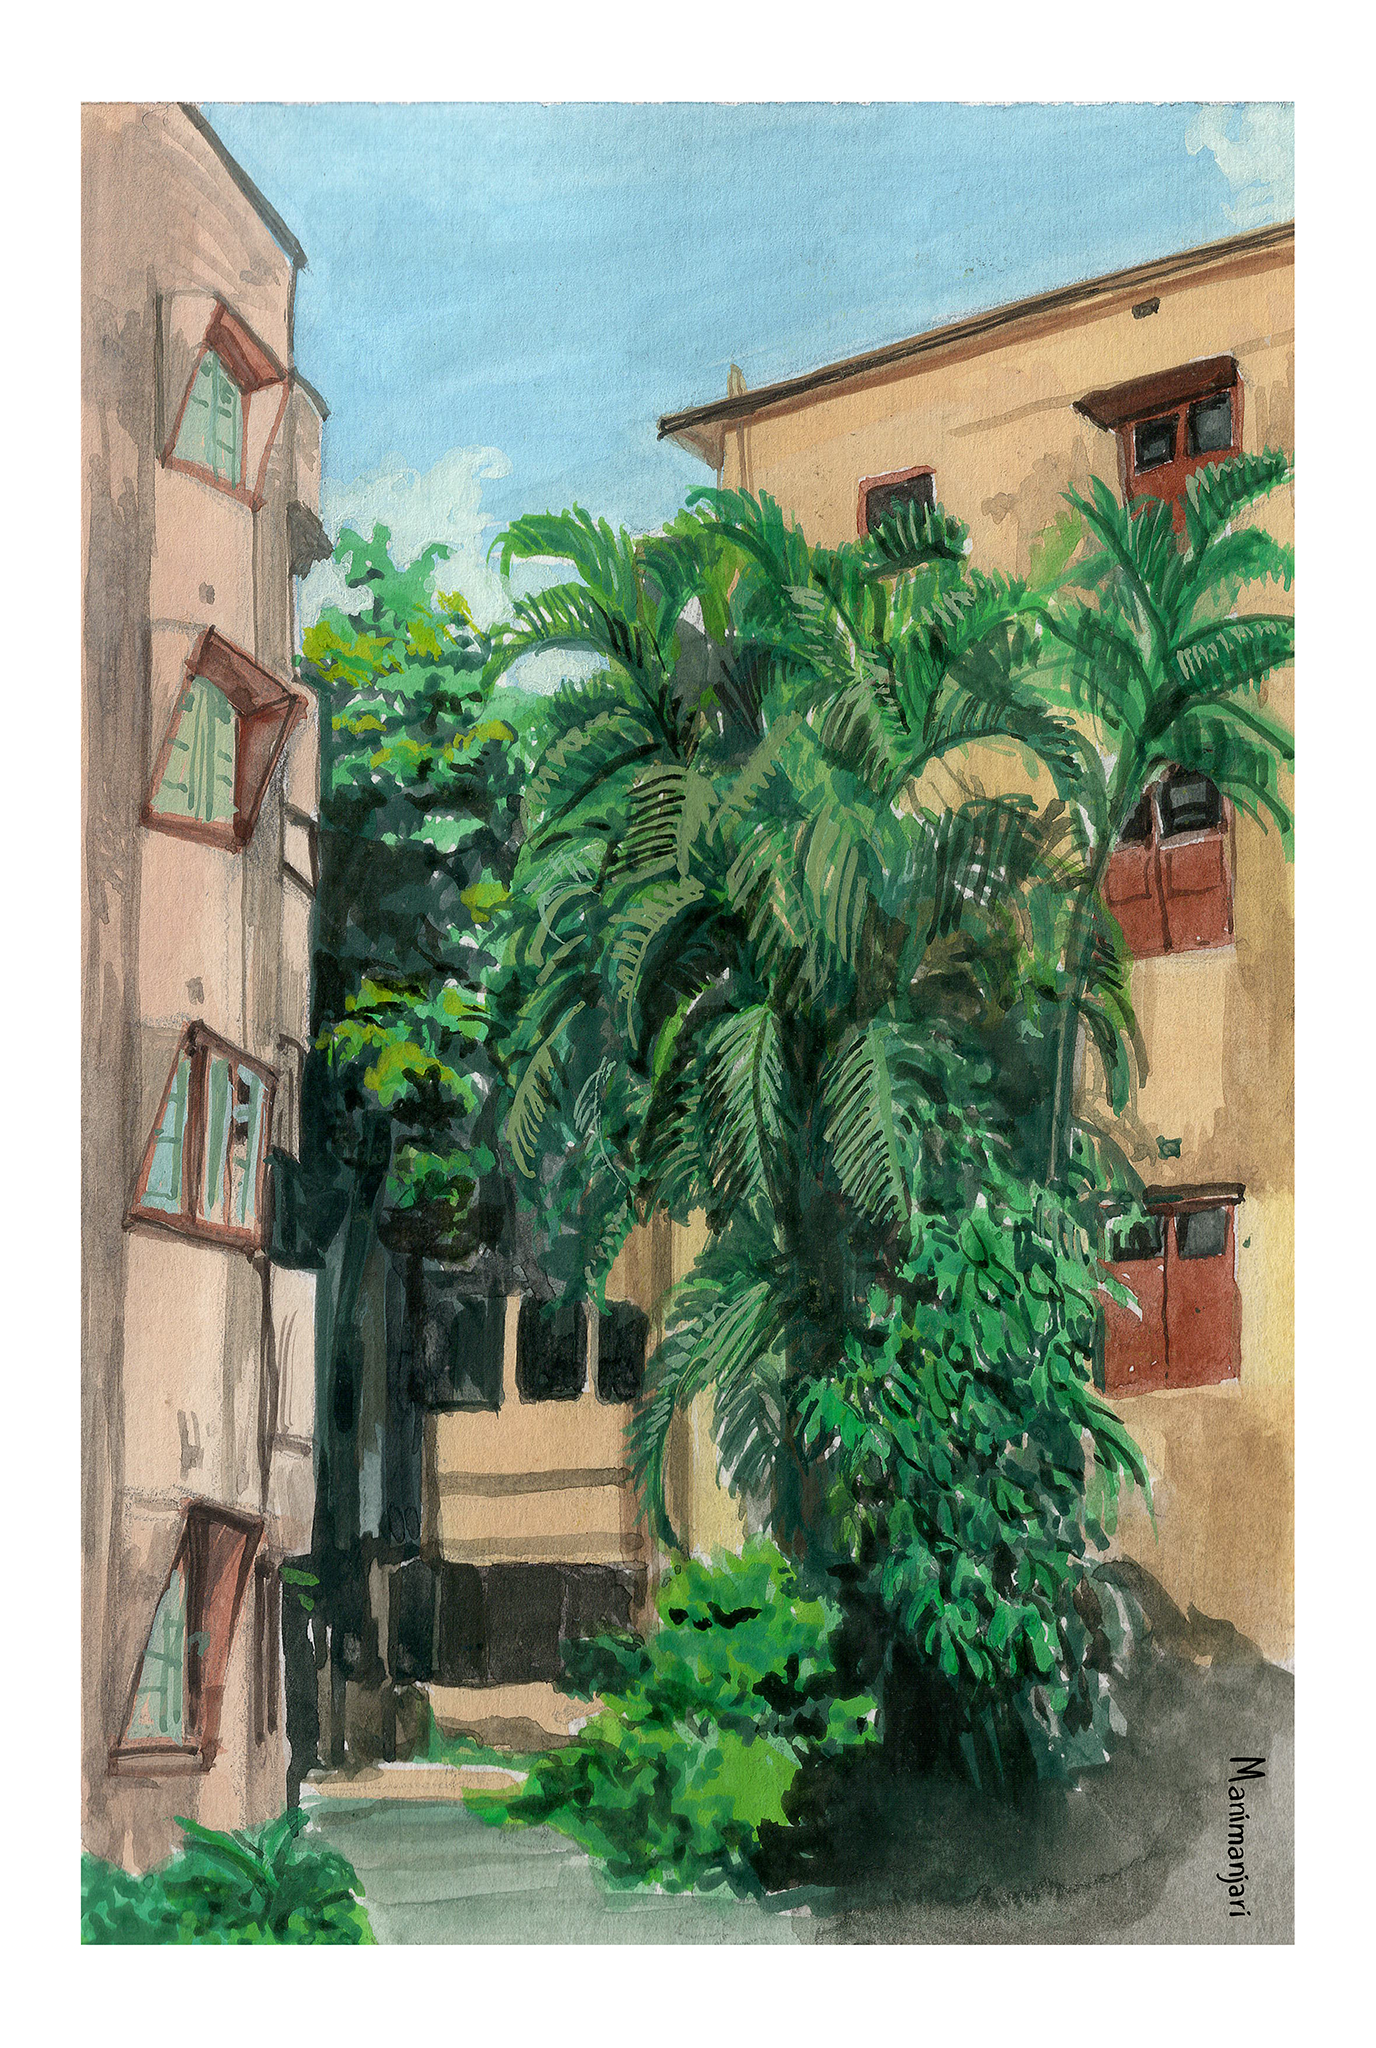 jodi-high quality-archival pigment prints-textured paper-250 GSM-natural shade- Modigliani matte- paper